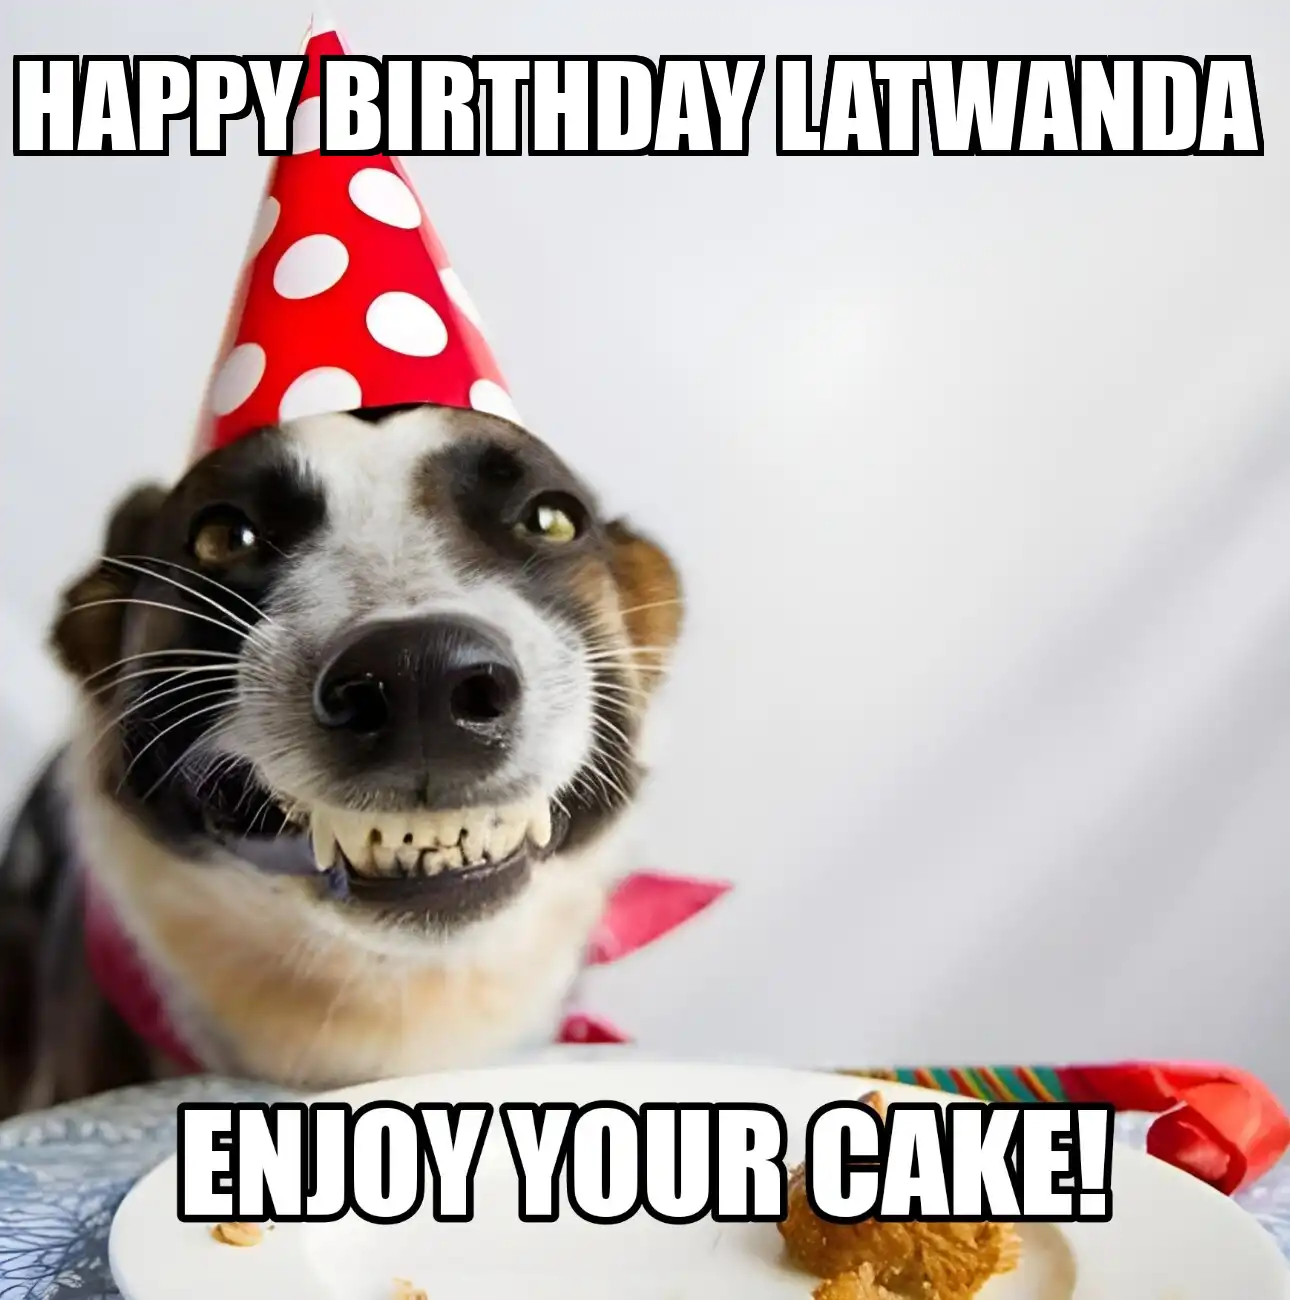 Happy Birthday Latwanda Enjoy Your Cake Dog Meme